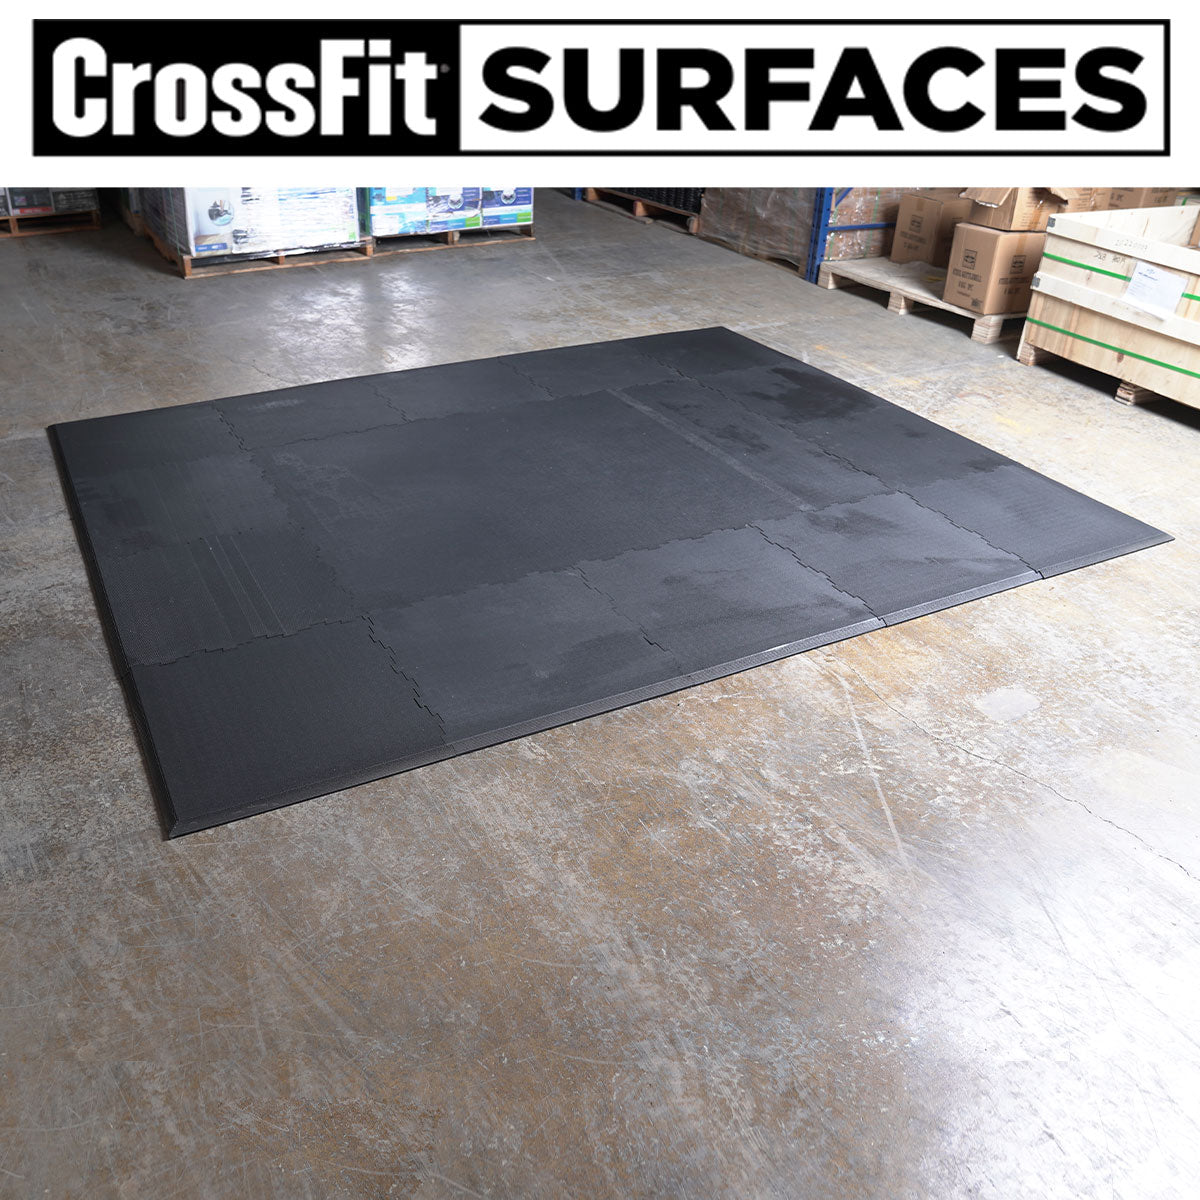 SurfaceCo - Game System Crossfit Flooring - 10’ x 8’ Bevelled Platform - Atlas Games USED